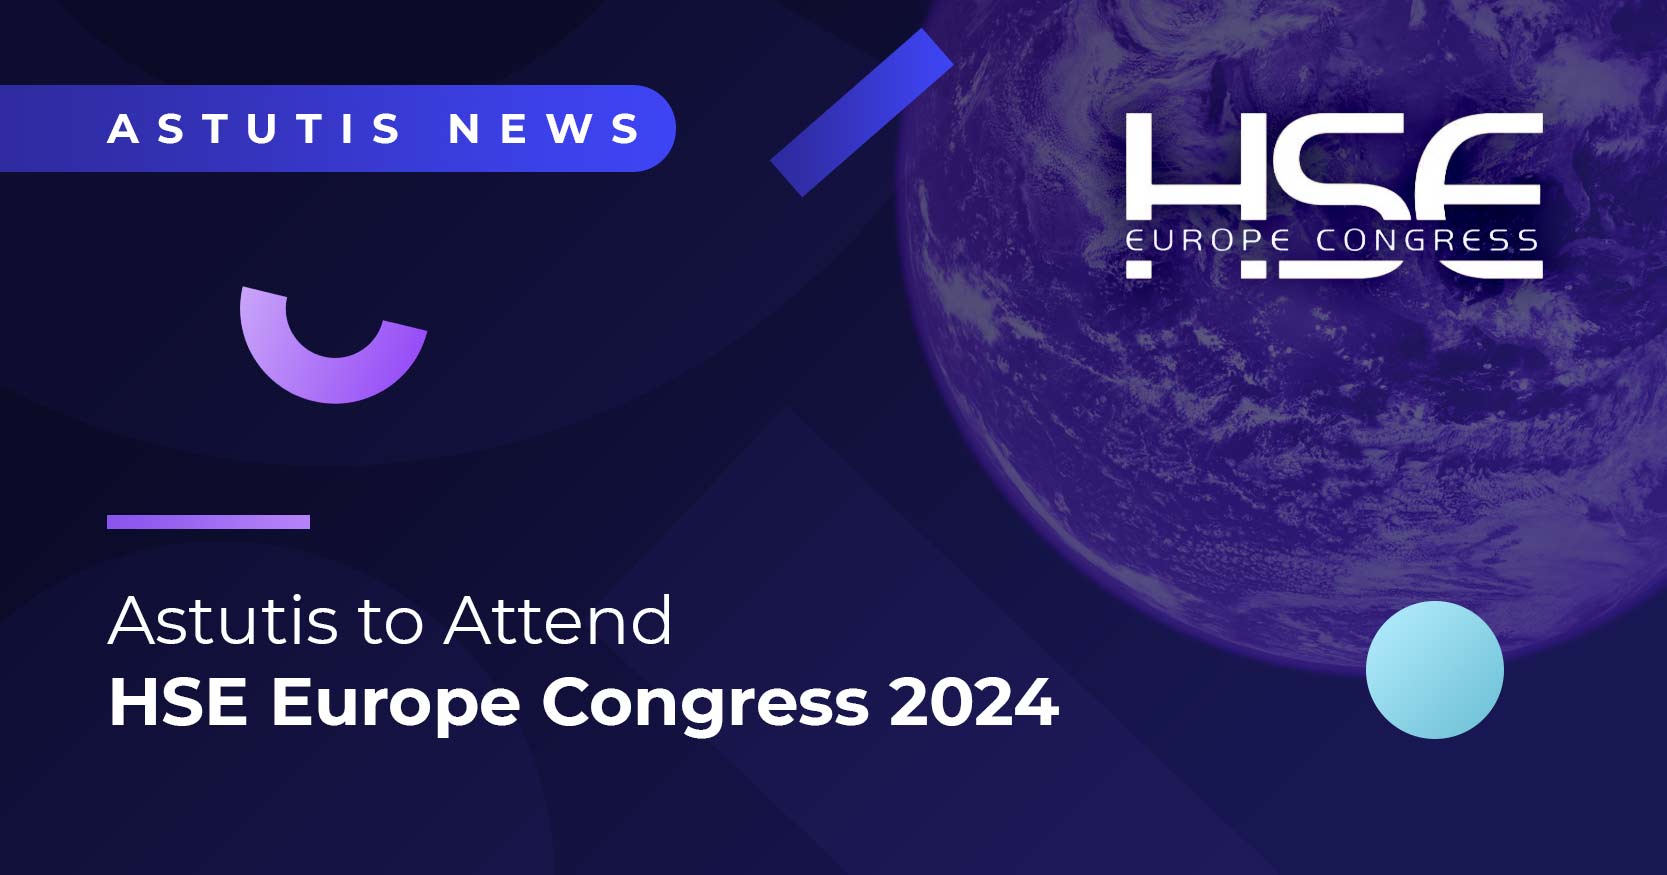 Astutis to Attend HSE Europe Congress 2024 Image